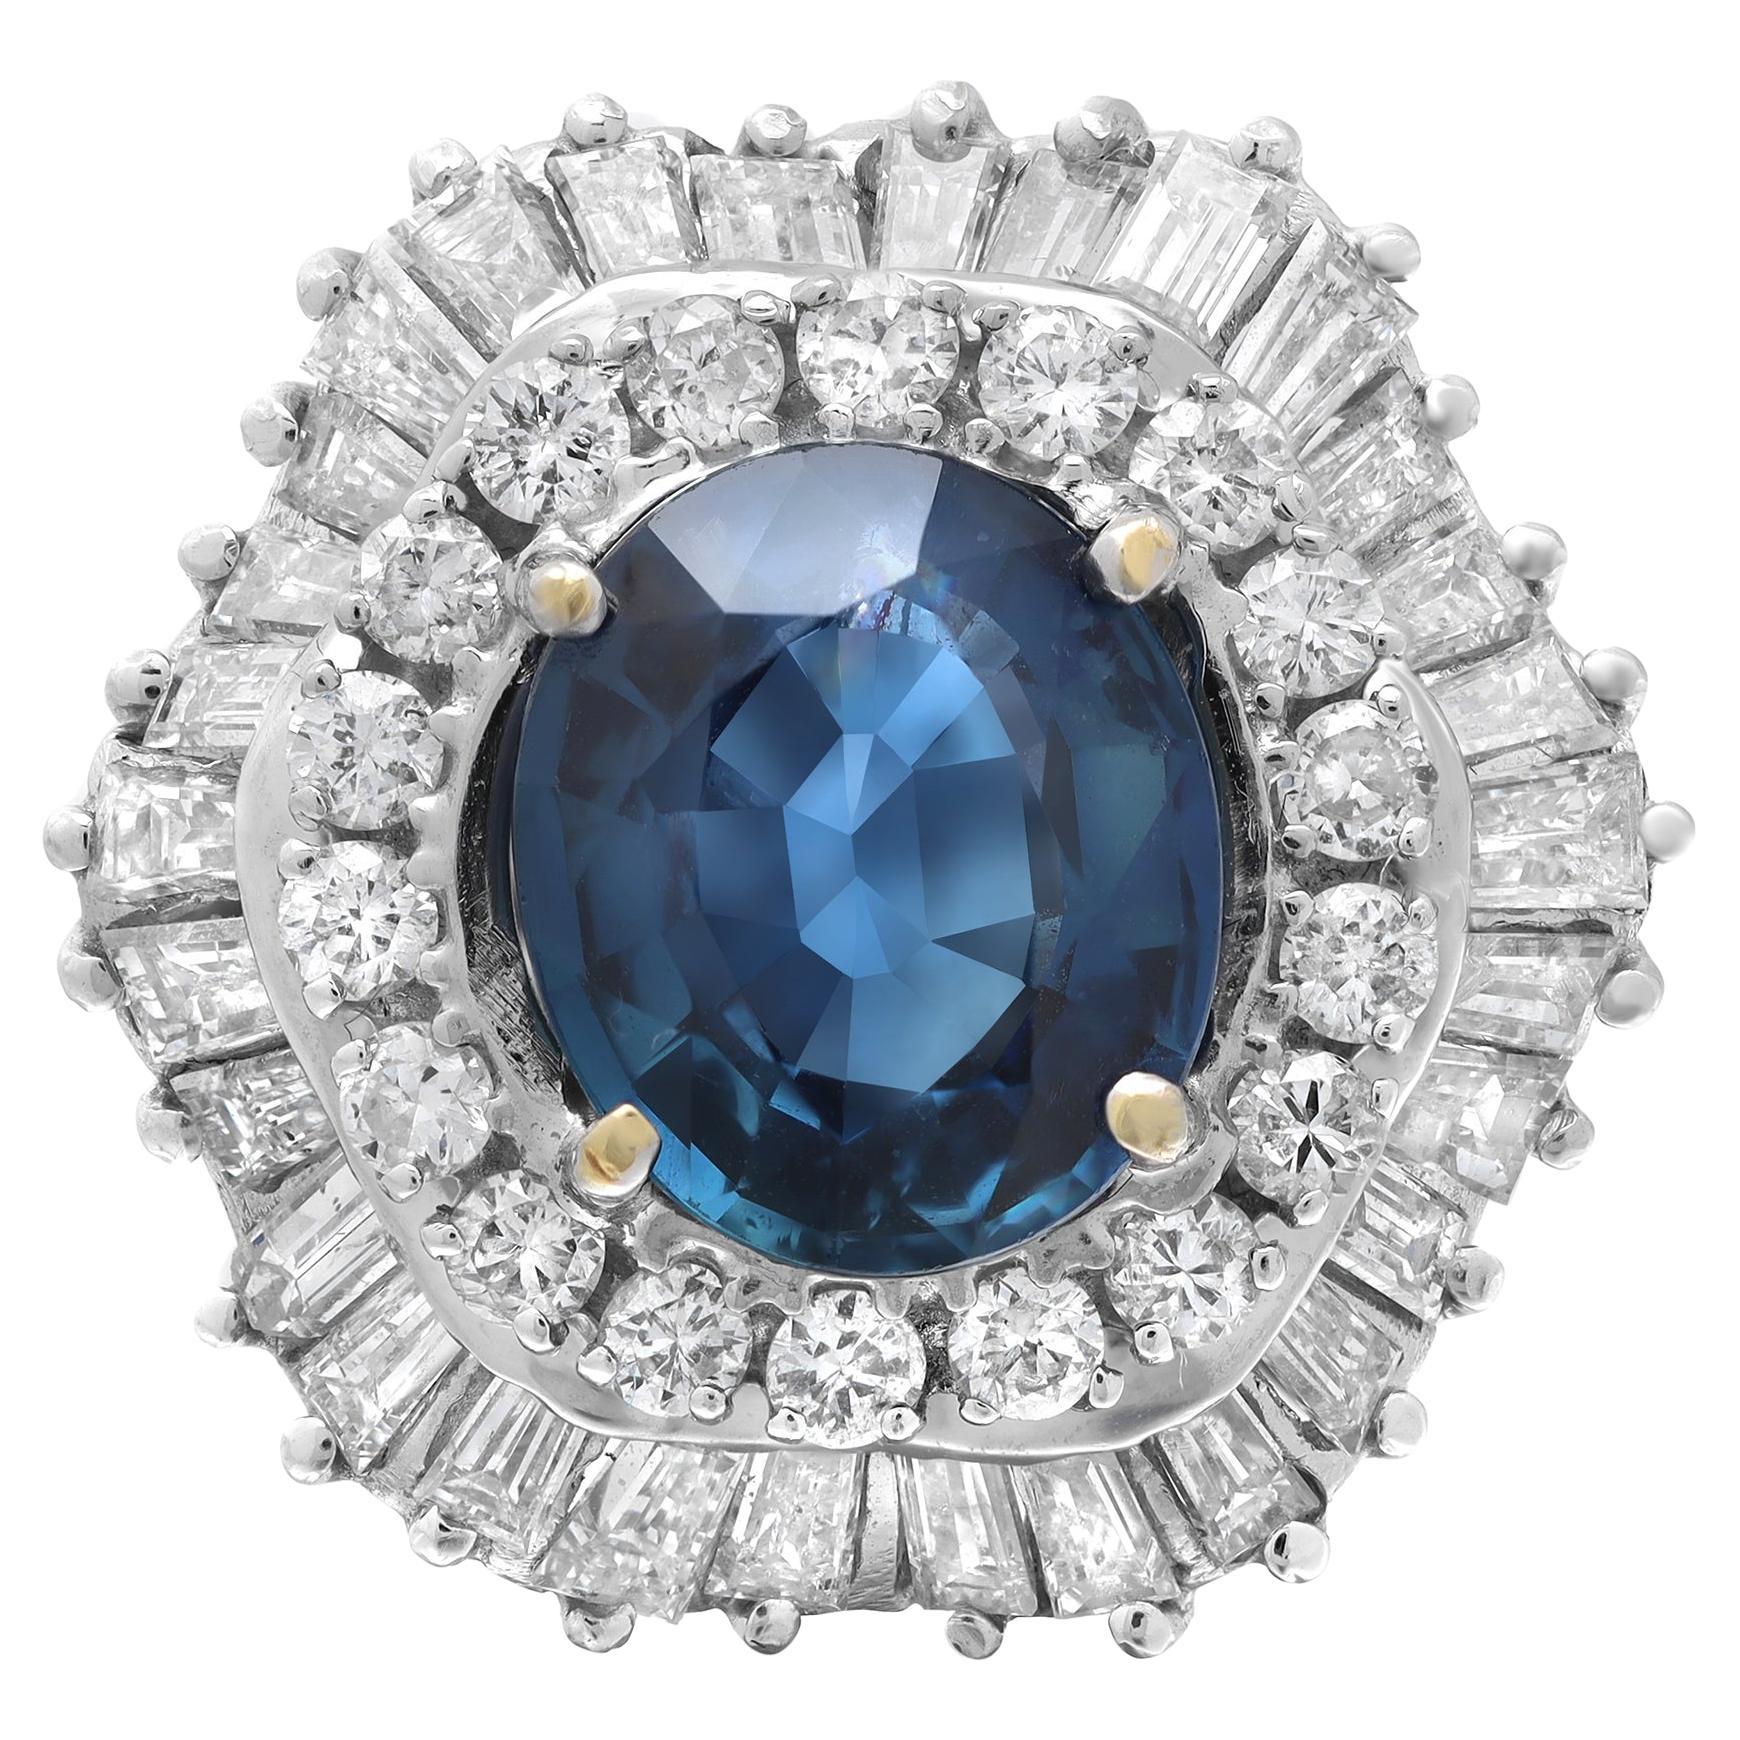 3.49cttw Blue Sapphire & 2.35cttw Diamond Cocktail Ring 14K White Gold